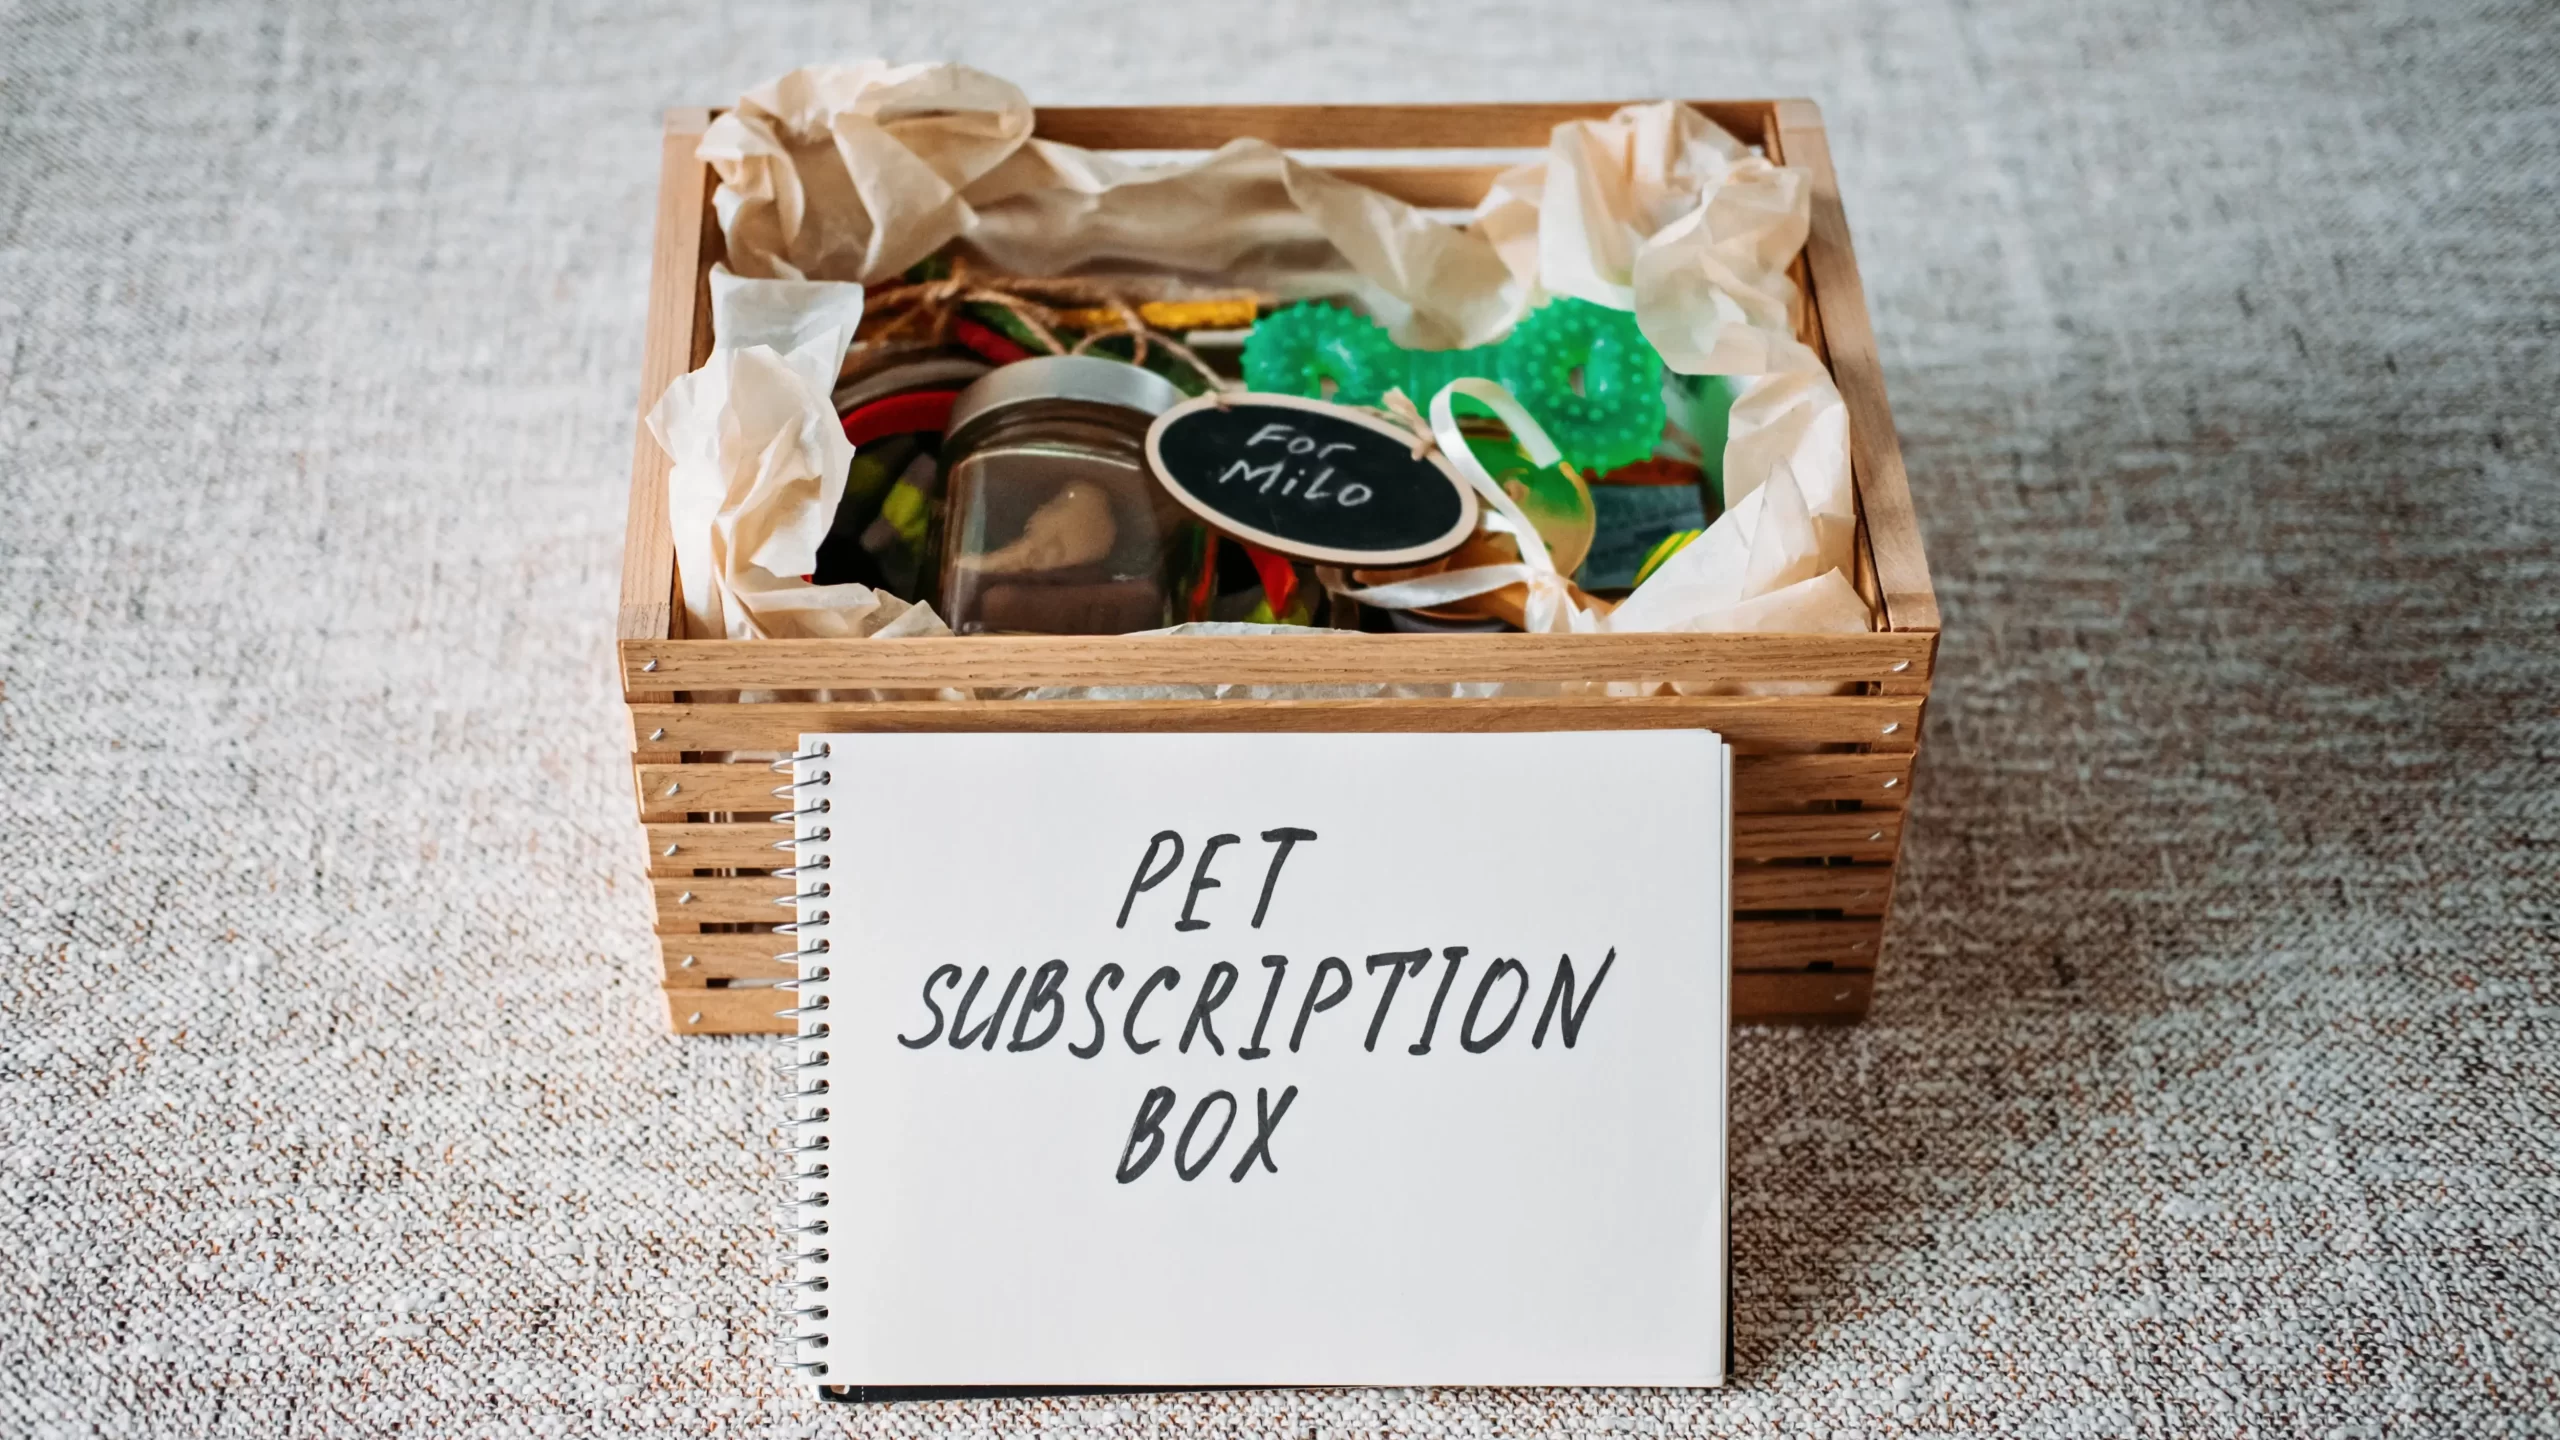 A pet subscription box